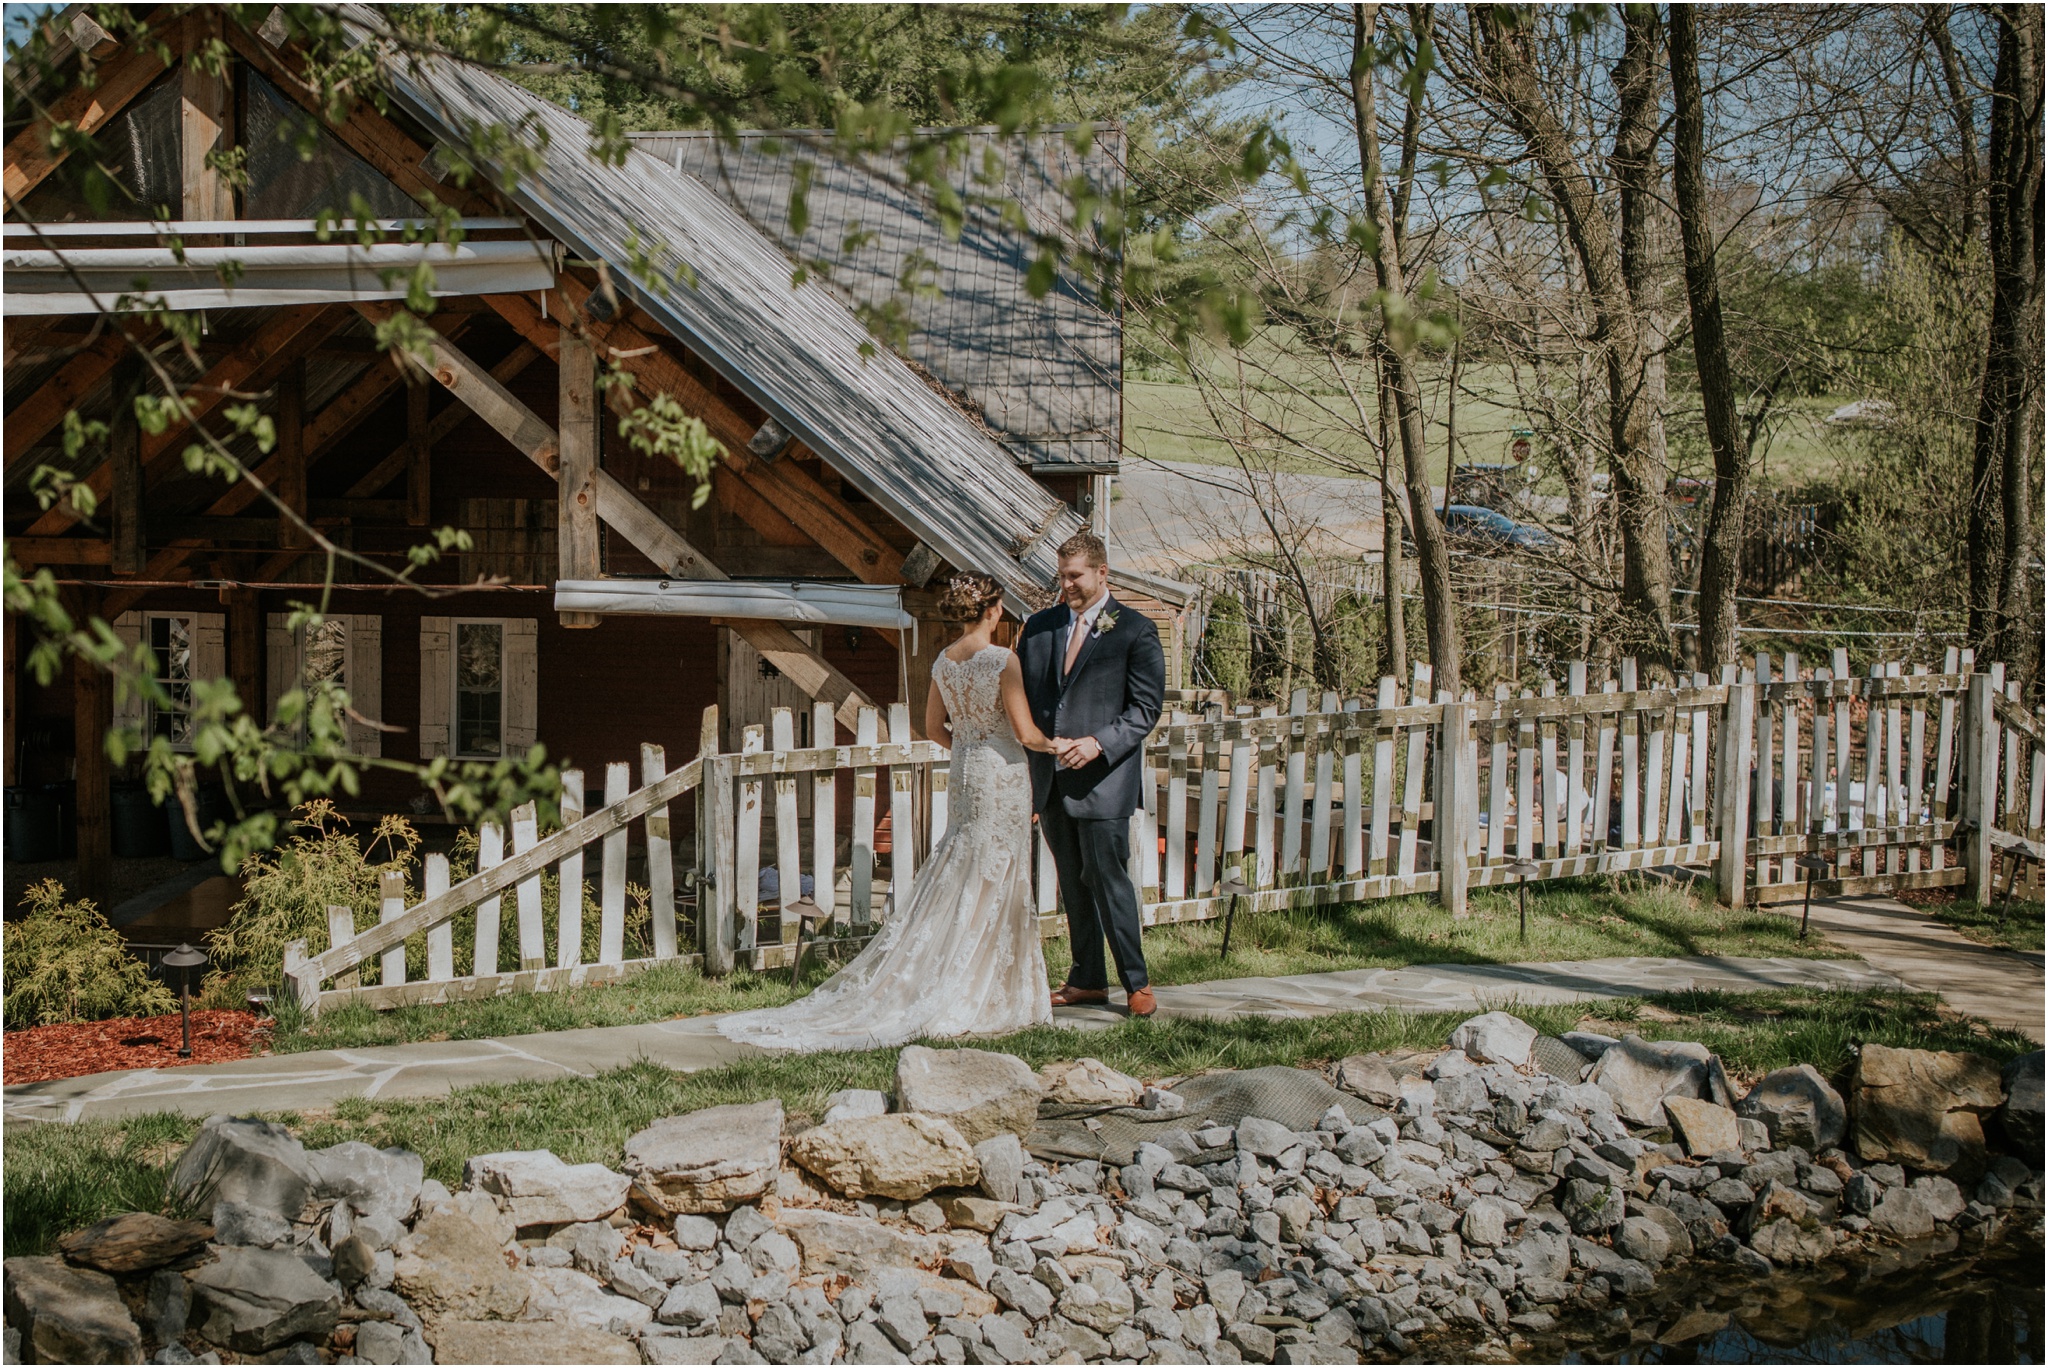 millstone-limestone-tn-tennessee-rustic-outdoors-pastel-lodge-cabin-venue-wedding-katy-sergent-photographer_0044.jpg